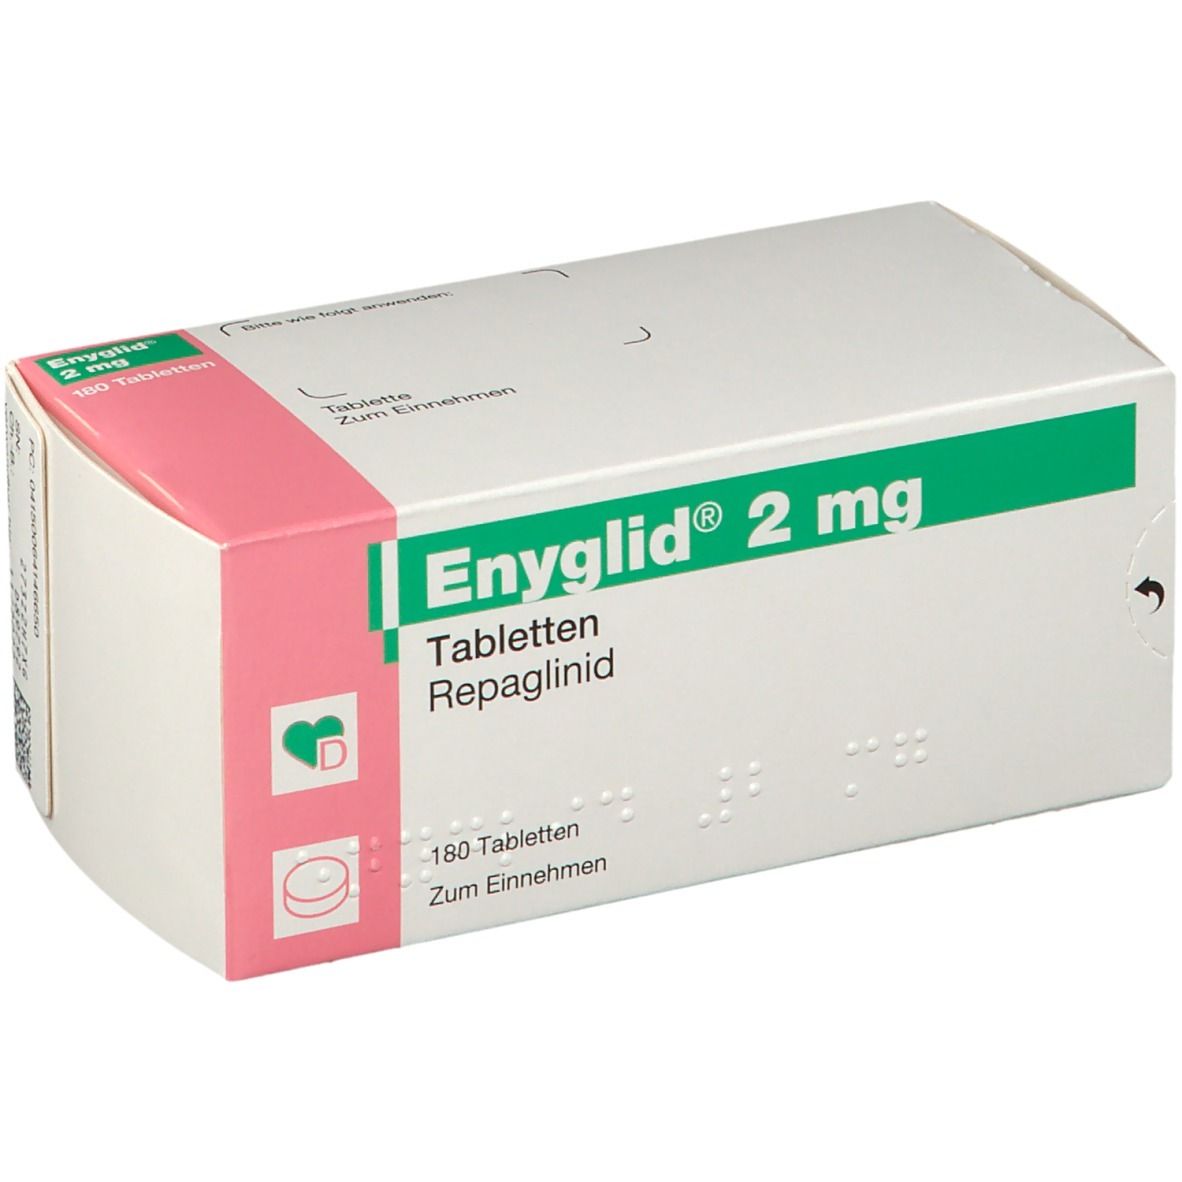 Enyglid® 2 mg